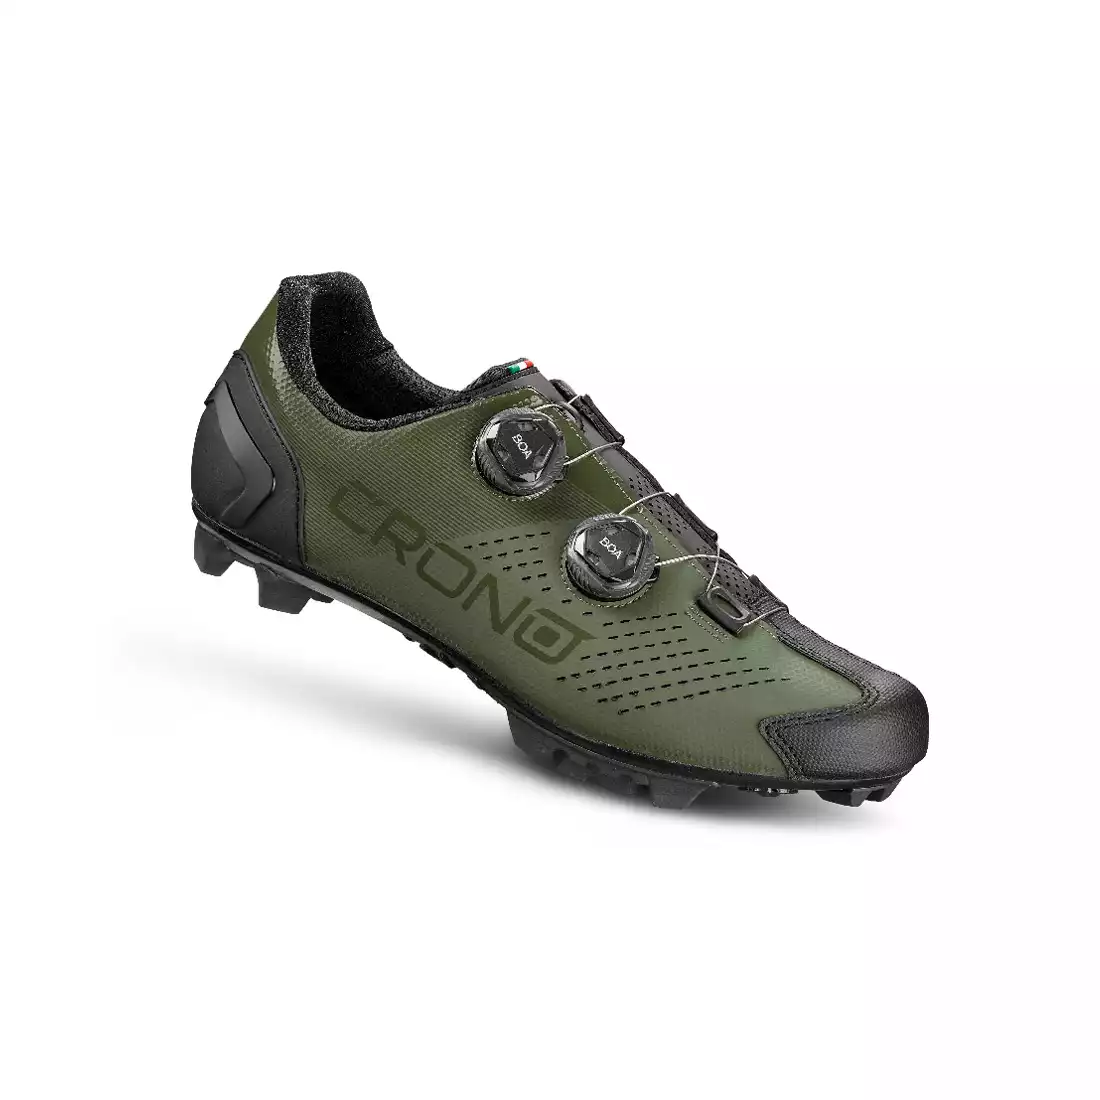 CRONO CX-2-22 Cycling shoes MTB, green